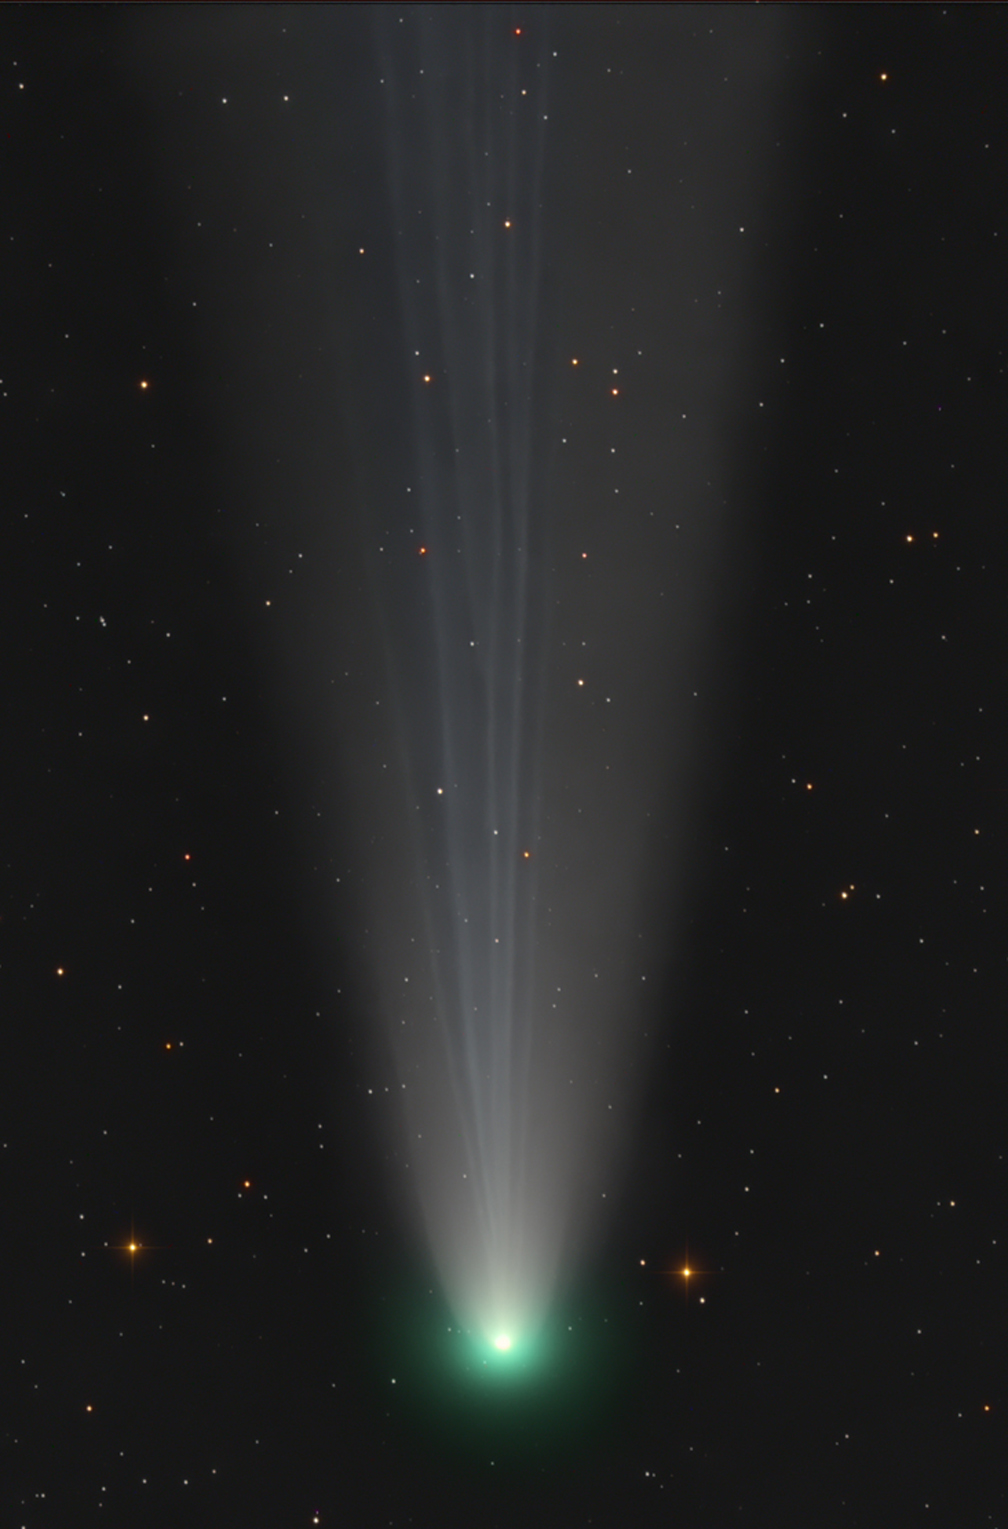 Comet Leonard amazing tail